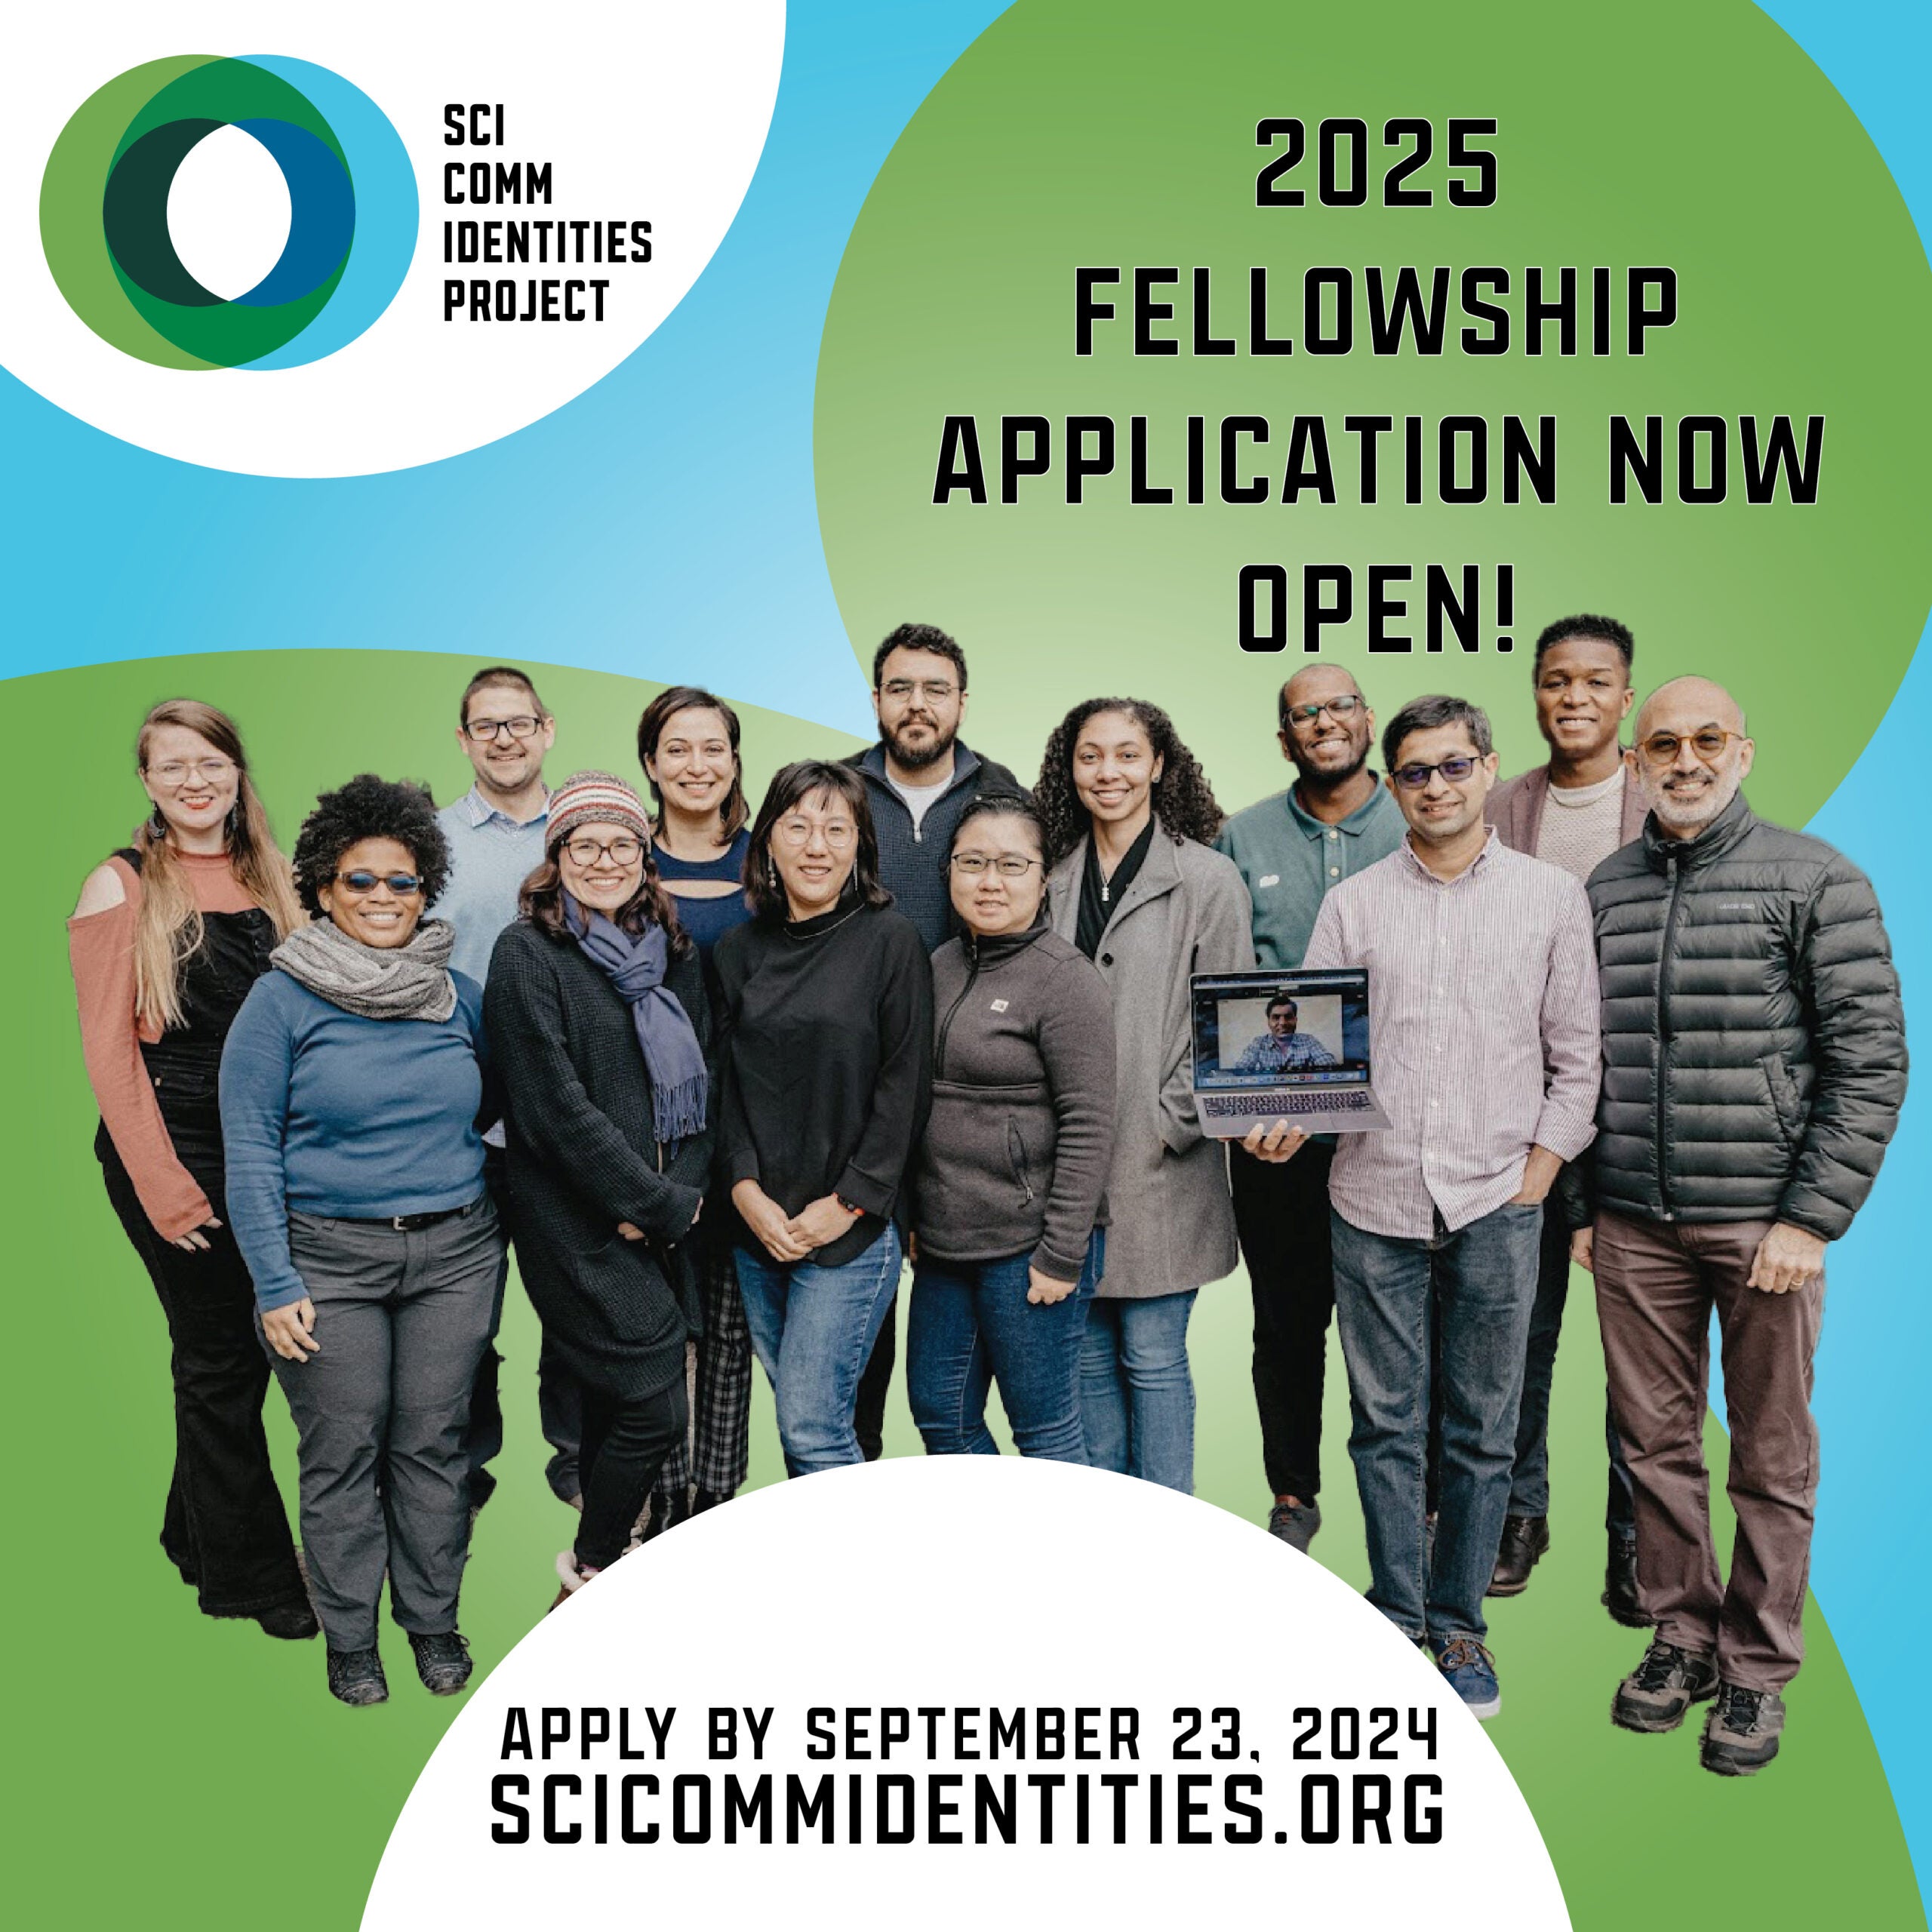 2025 Fellowship Application Now Open - SciComm Identities Project Fellowship applications are open